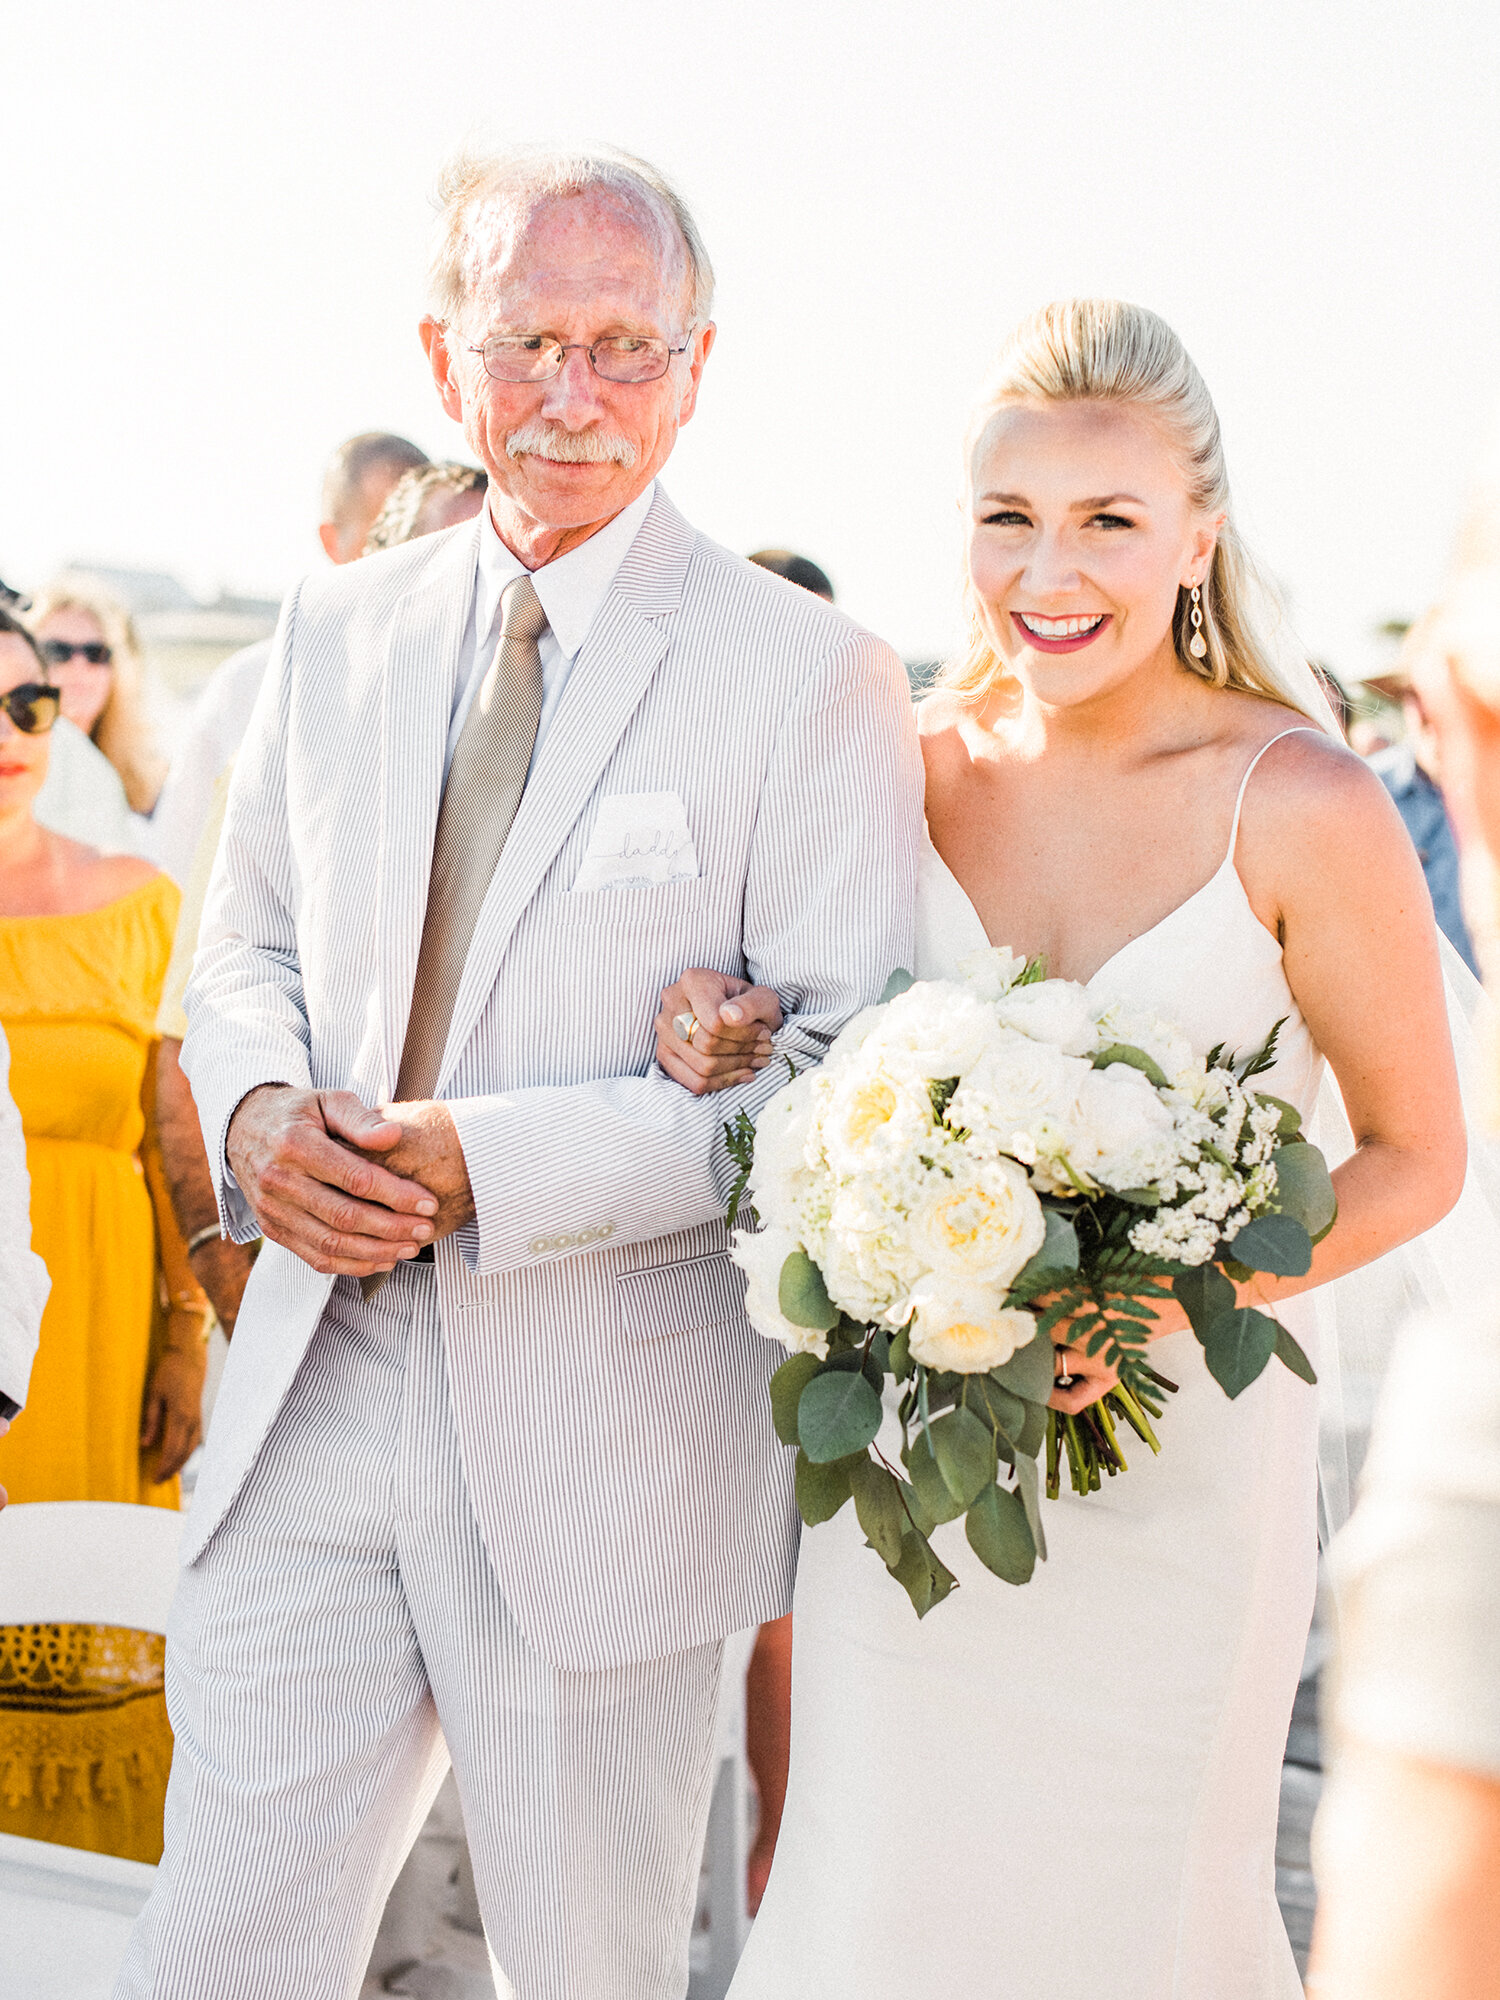 GRAYTON-BEACH-30-a-wedding-family-photographer-charleston-rosemary-grayton-watercolor-desiree-gardner-photography-HOLBROOK-WEDDING-2019-533.jpg